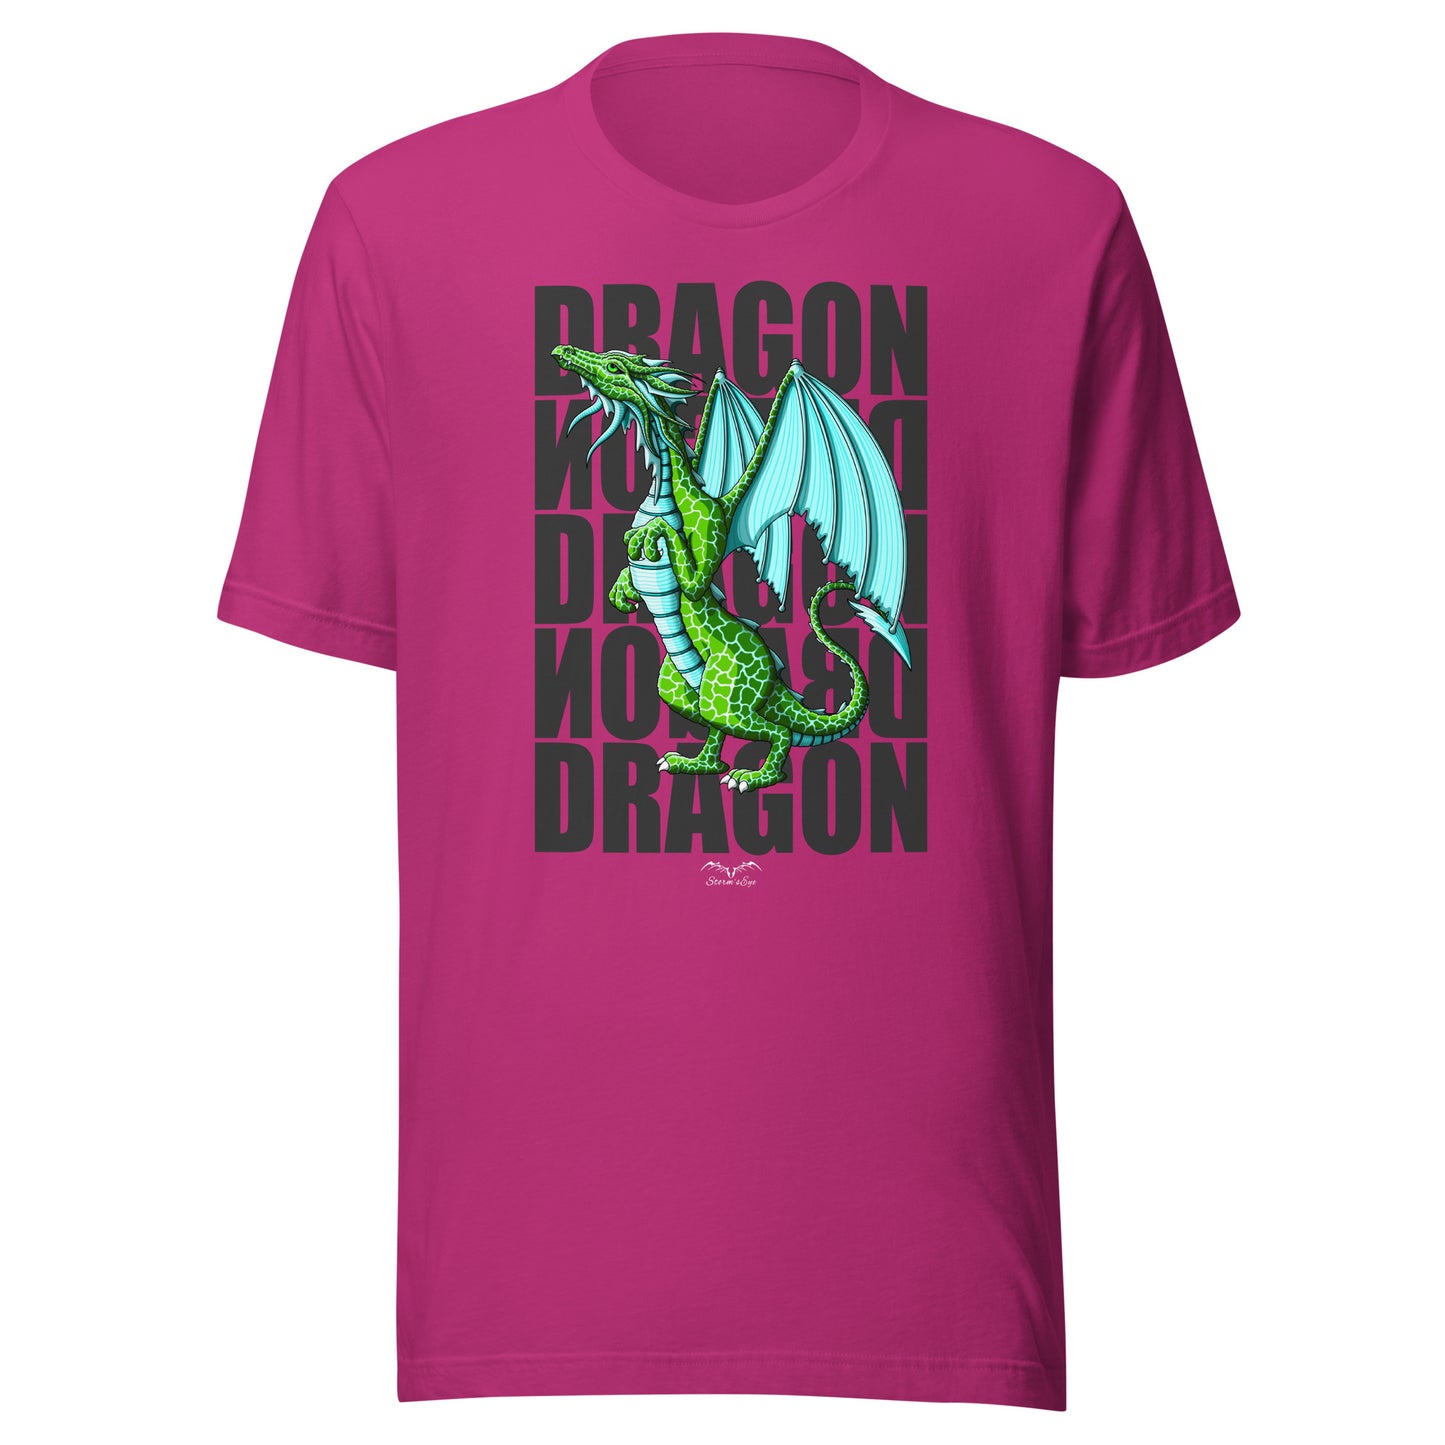 green dragon fantasy t-shirt, bright pink, by stormseye design